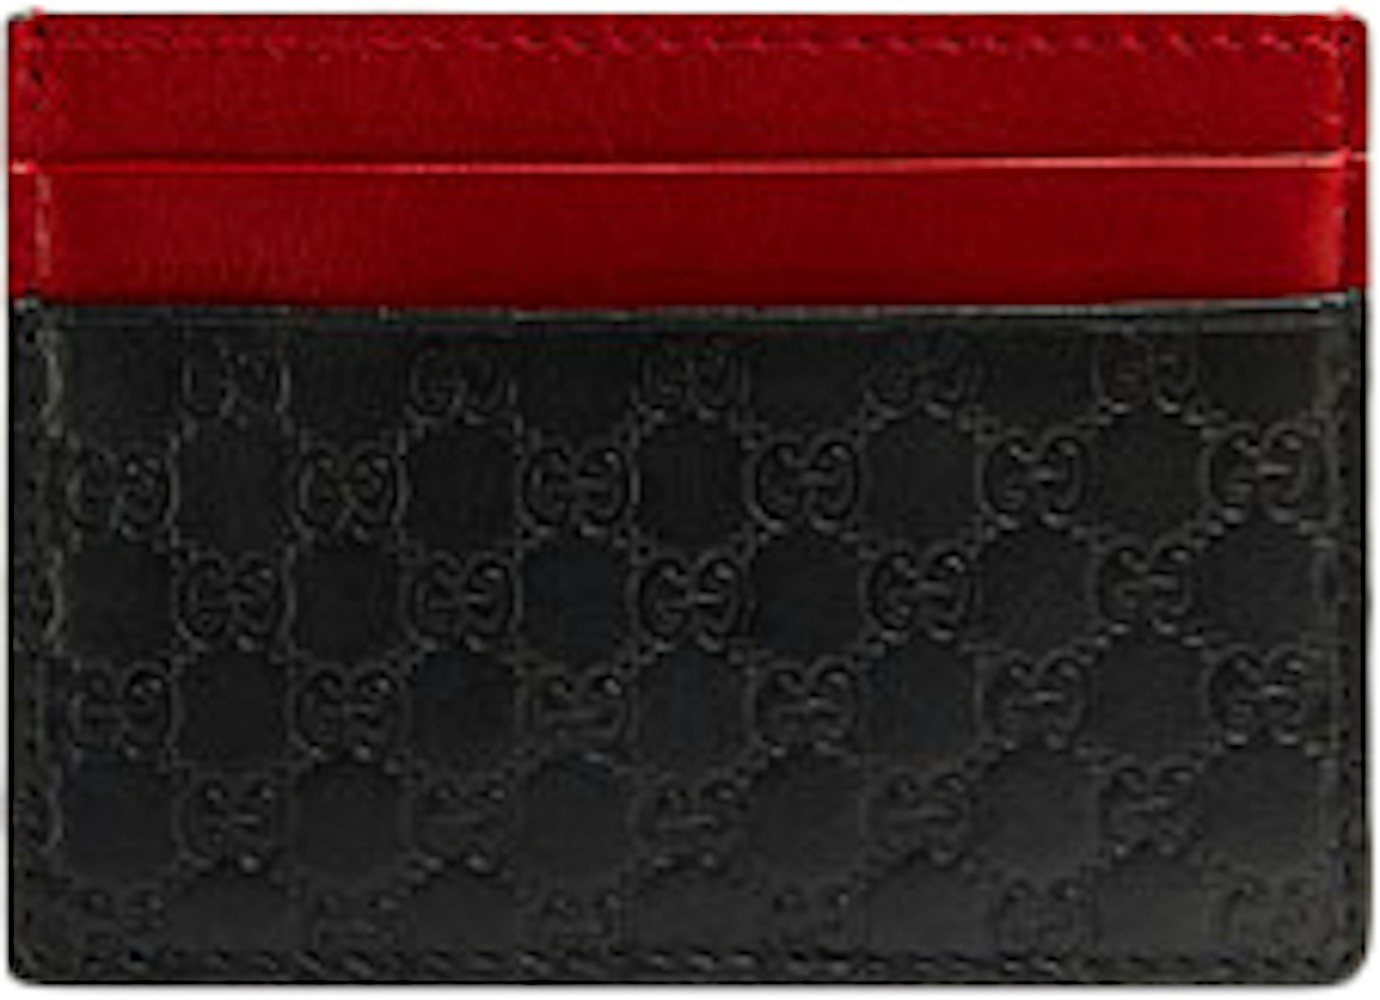 Gucci MicroGuccissima Black/Red/Green in Leather